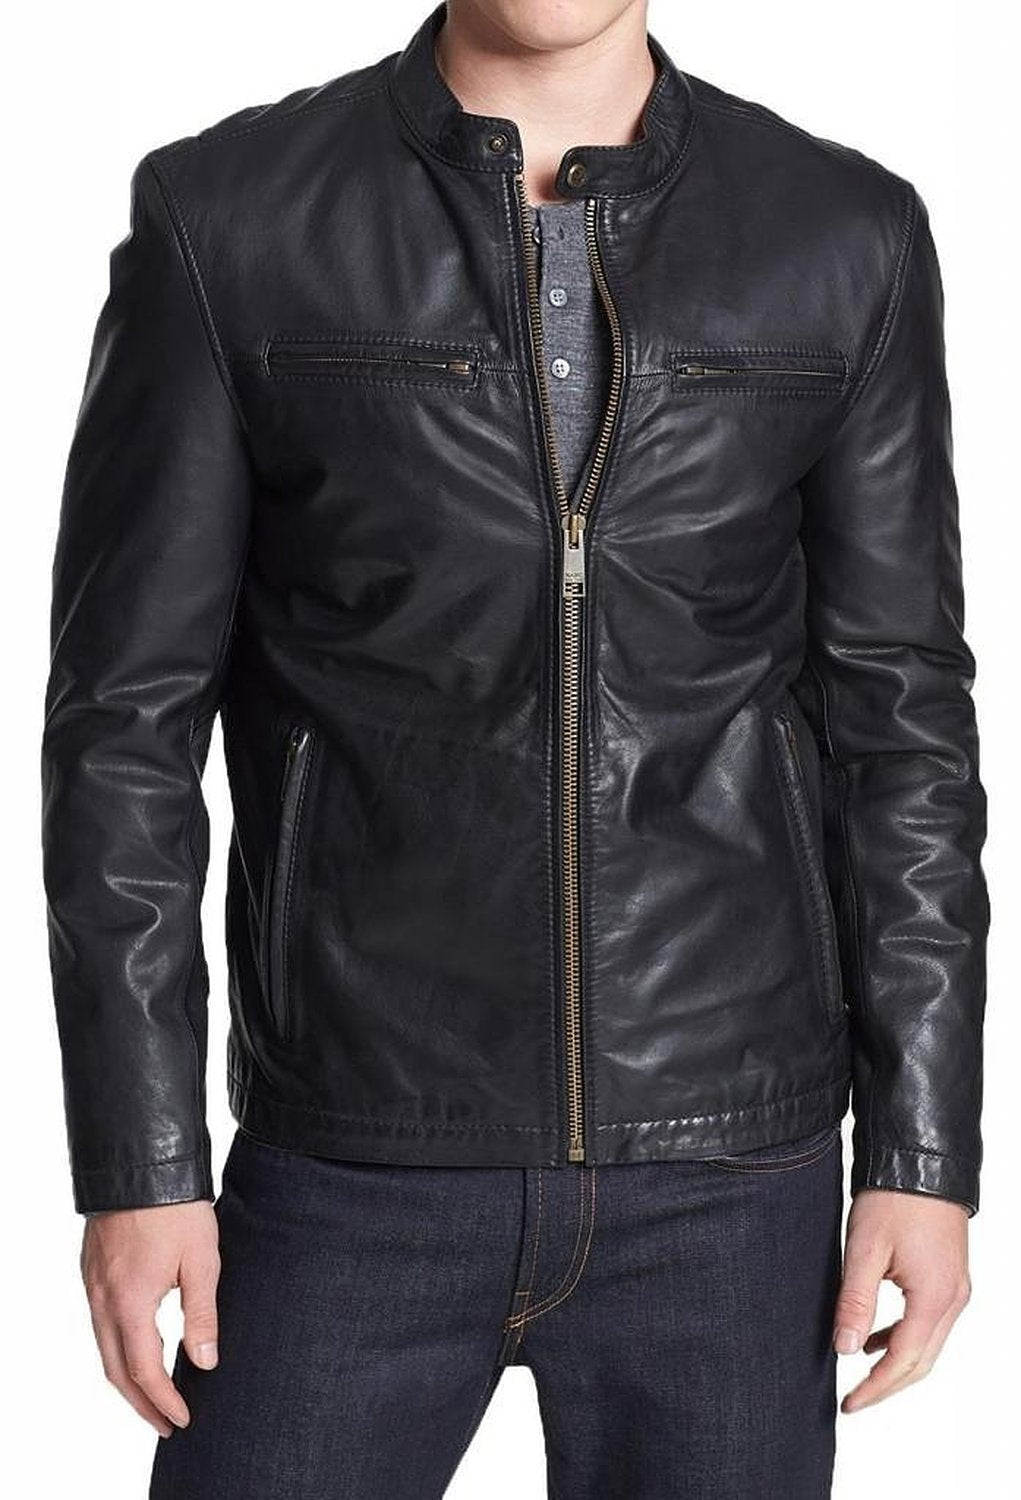 Leather Jackets Hub Mens Genuine Lambskin Leather Jacket (Black, Racer Jacket) - 1501021